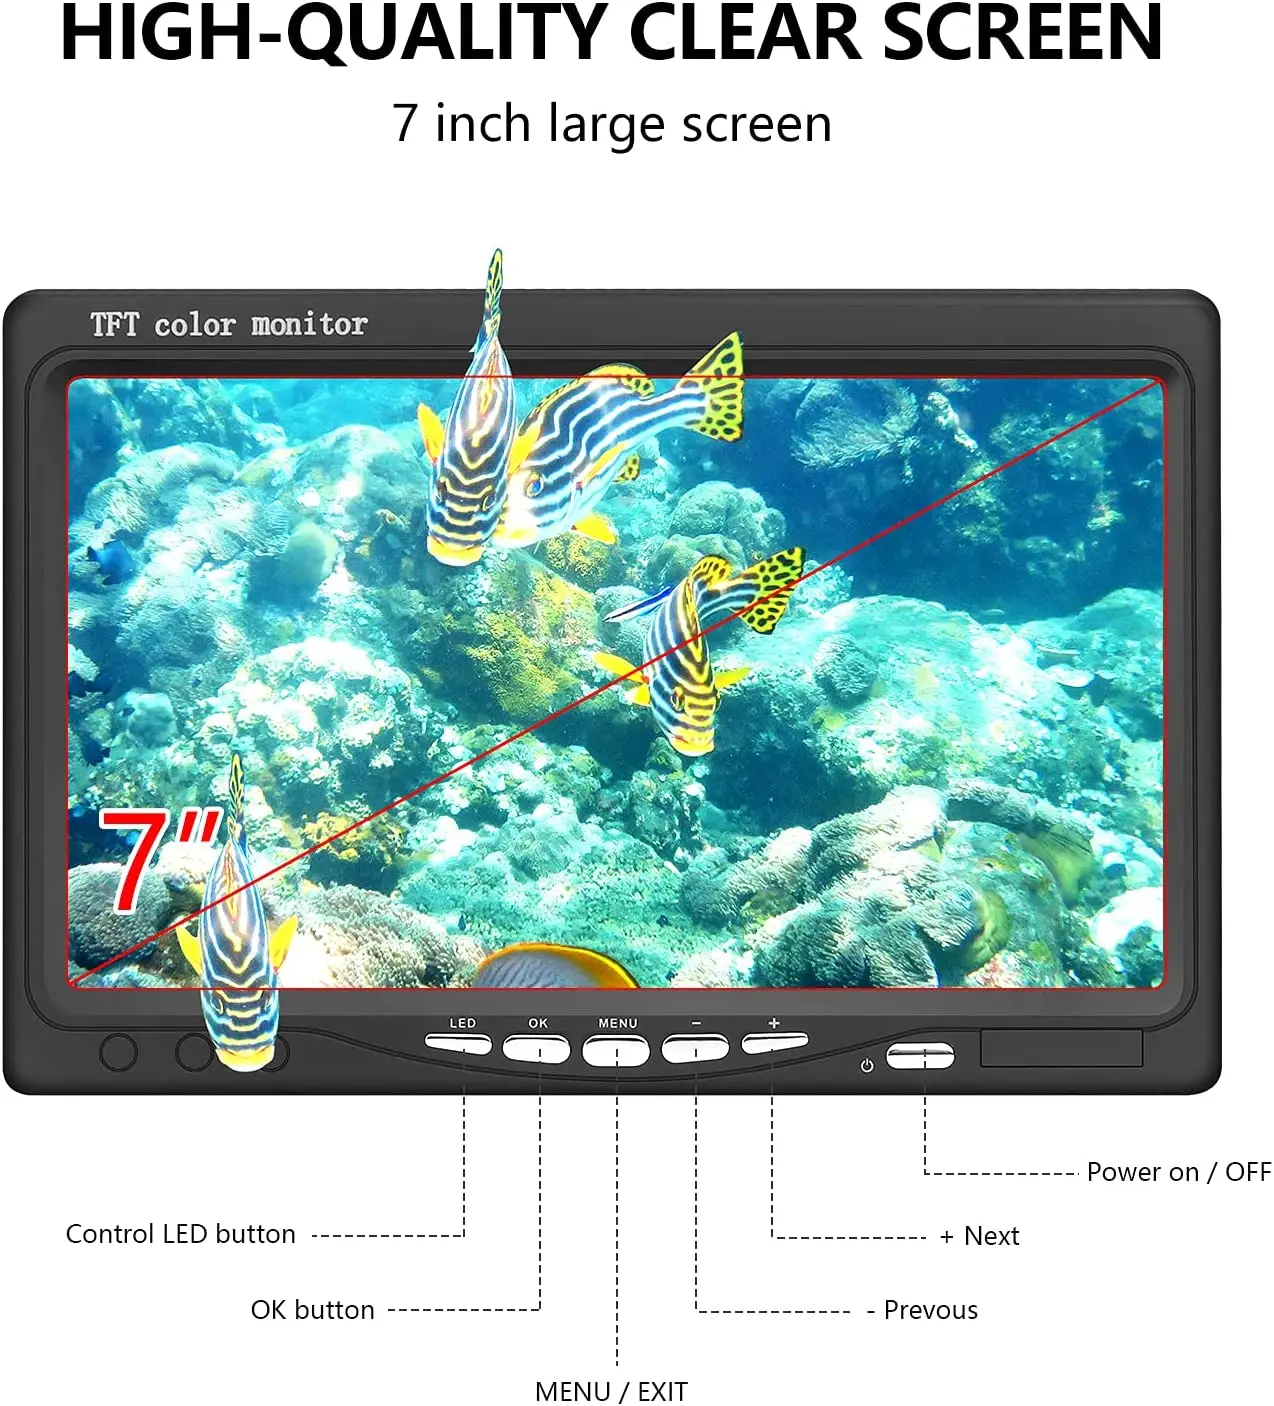 MOQCQGR 480P Underwater Fishing Camera .Portable Video Fish Finder wiht 7  inch HD Monitor 1200TVL Camera for Ice,Lake - AliExpress